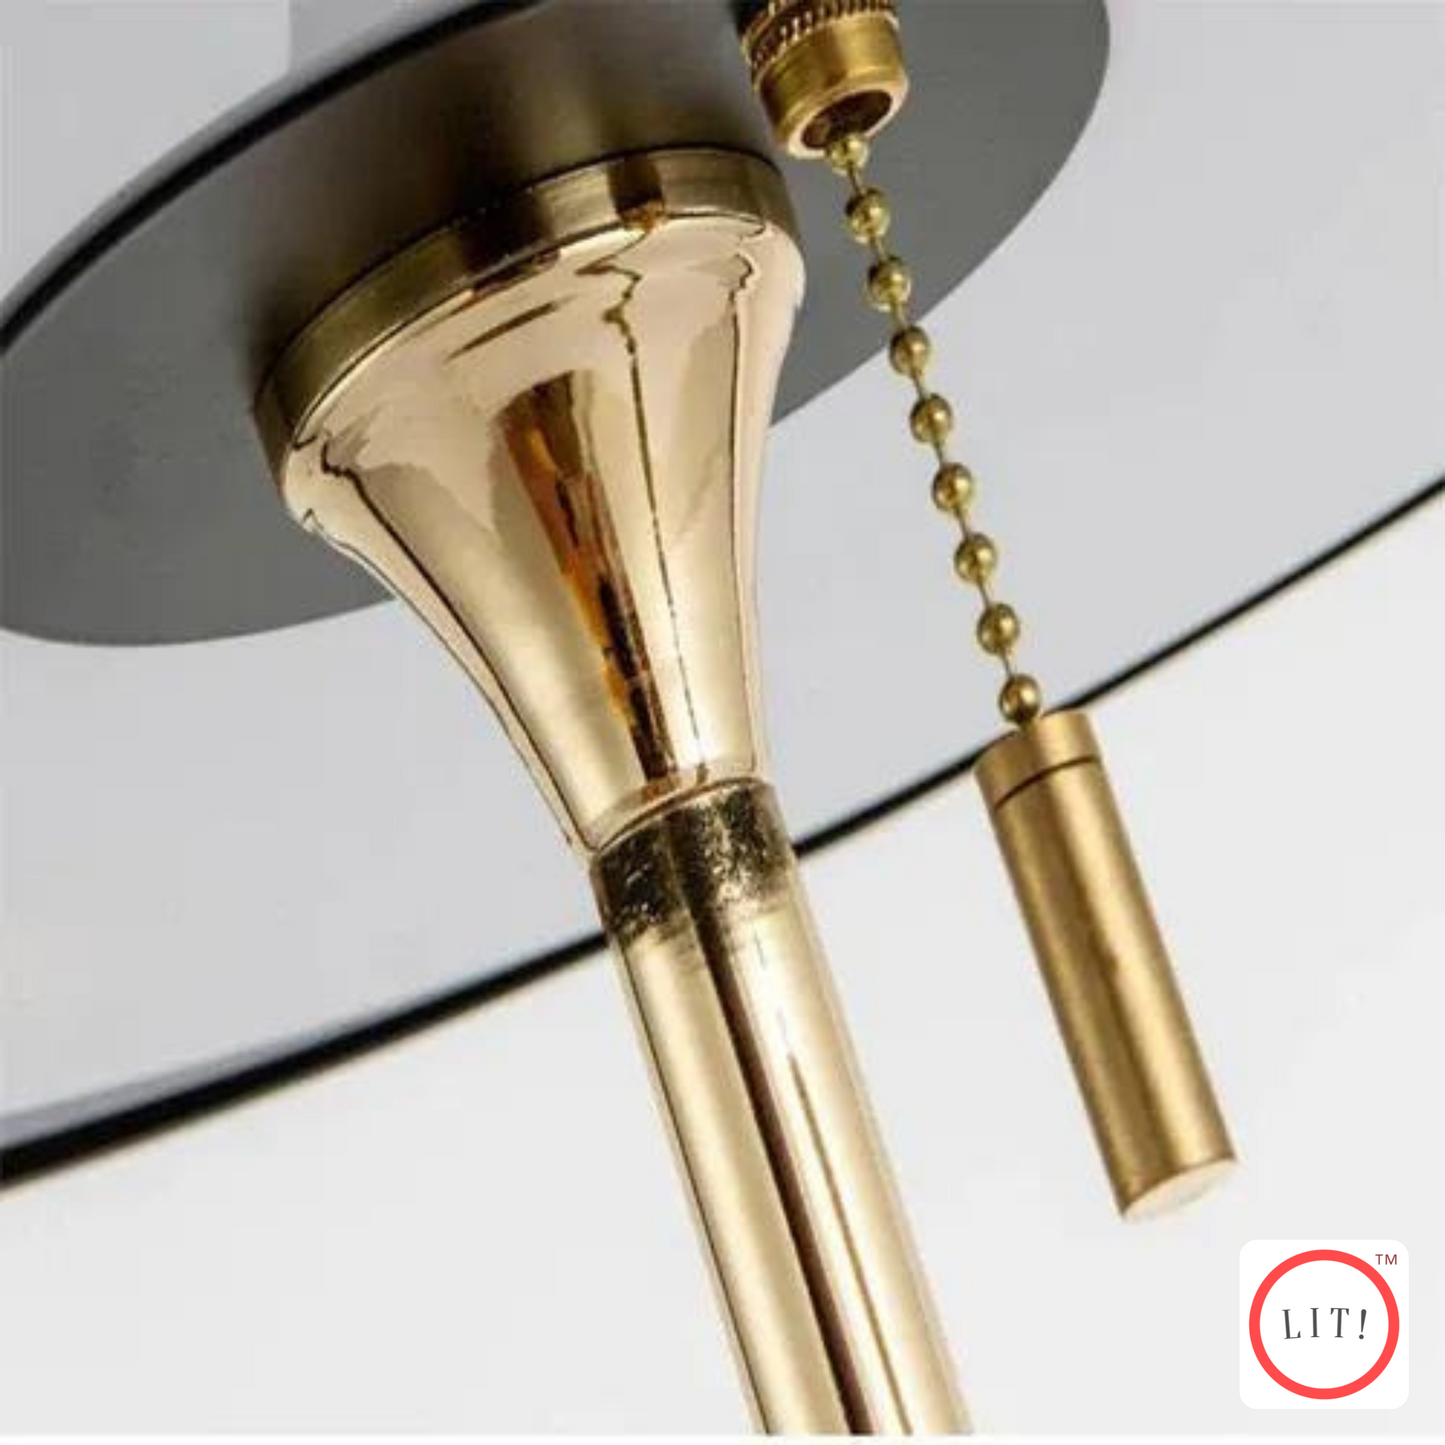 Fashionable Creative Rogano Table Lamp